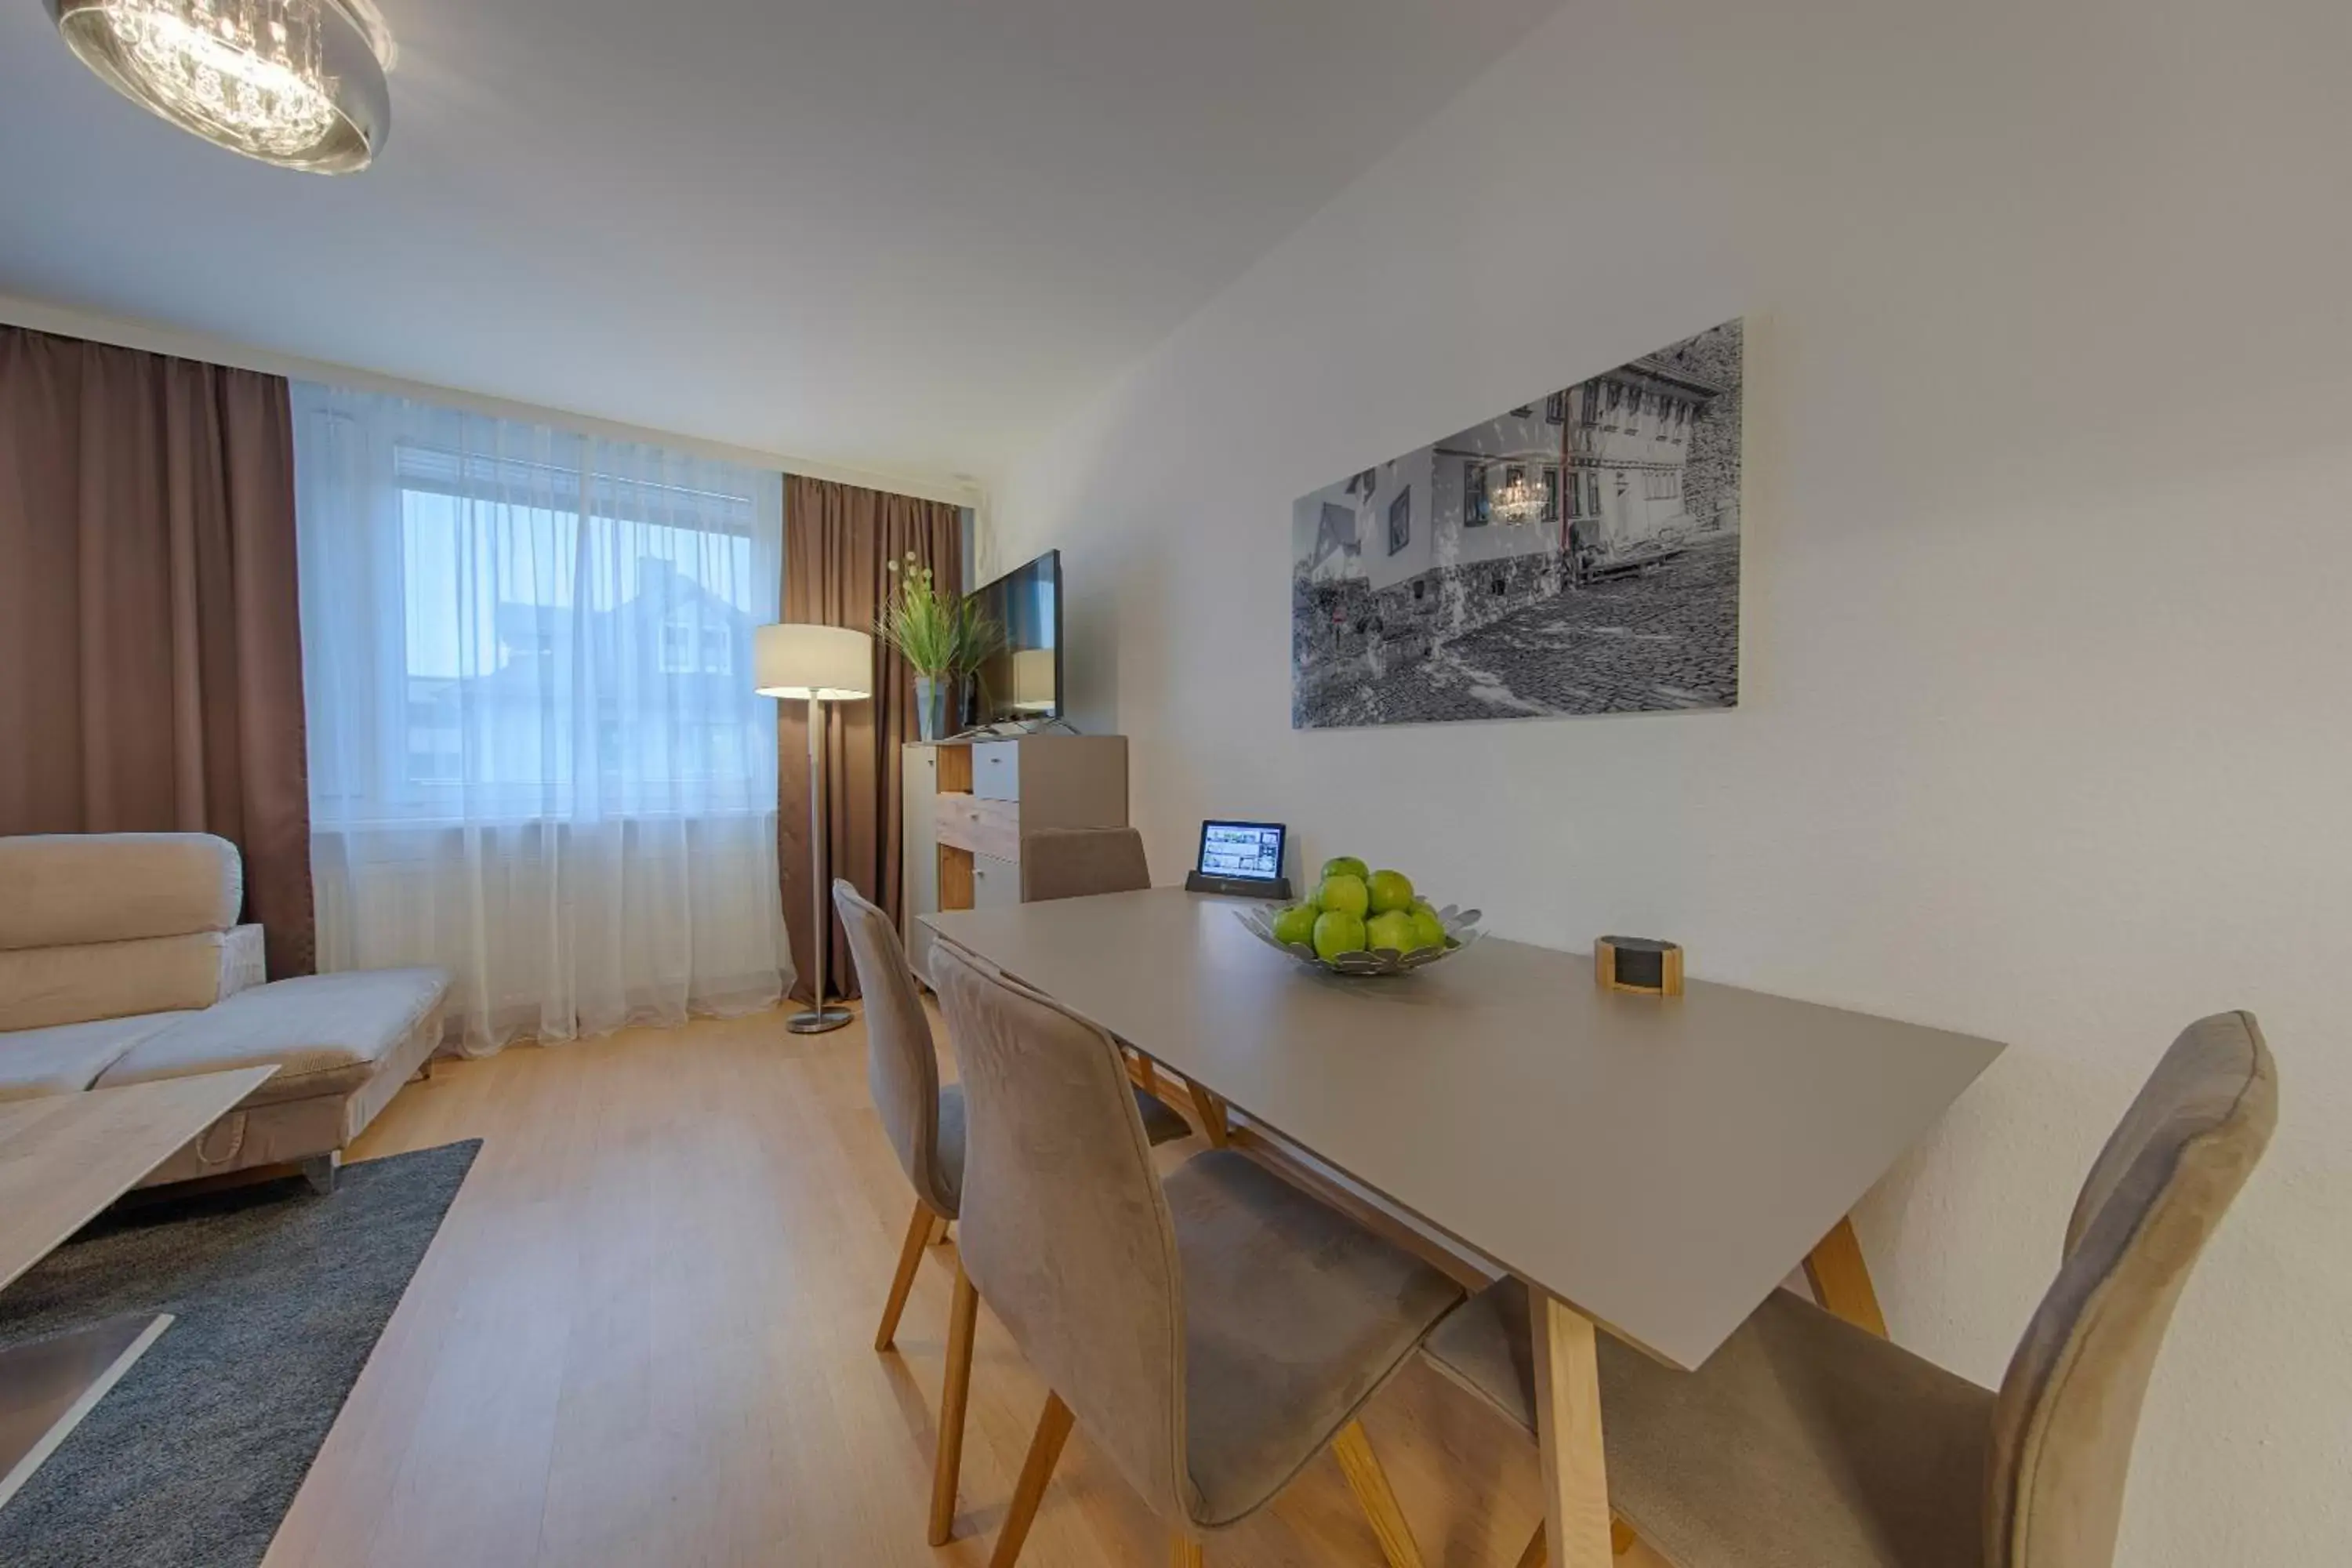 Living room, Dining Area in Best Western Hotel Wetzlar